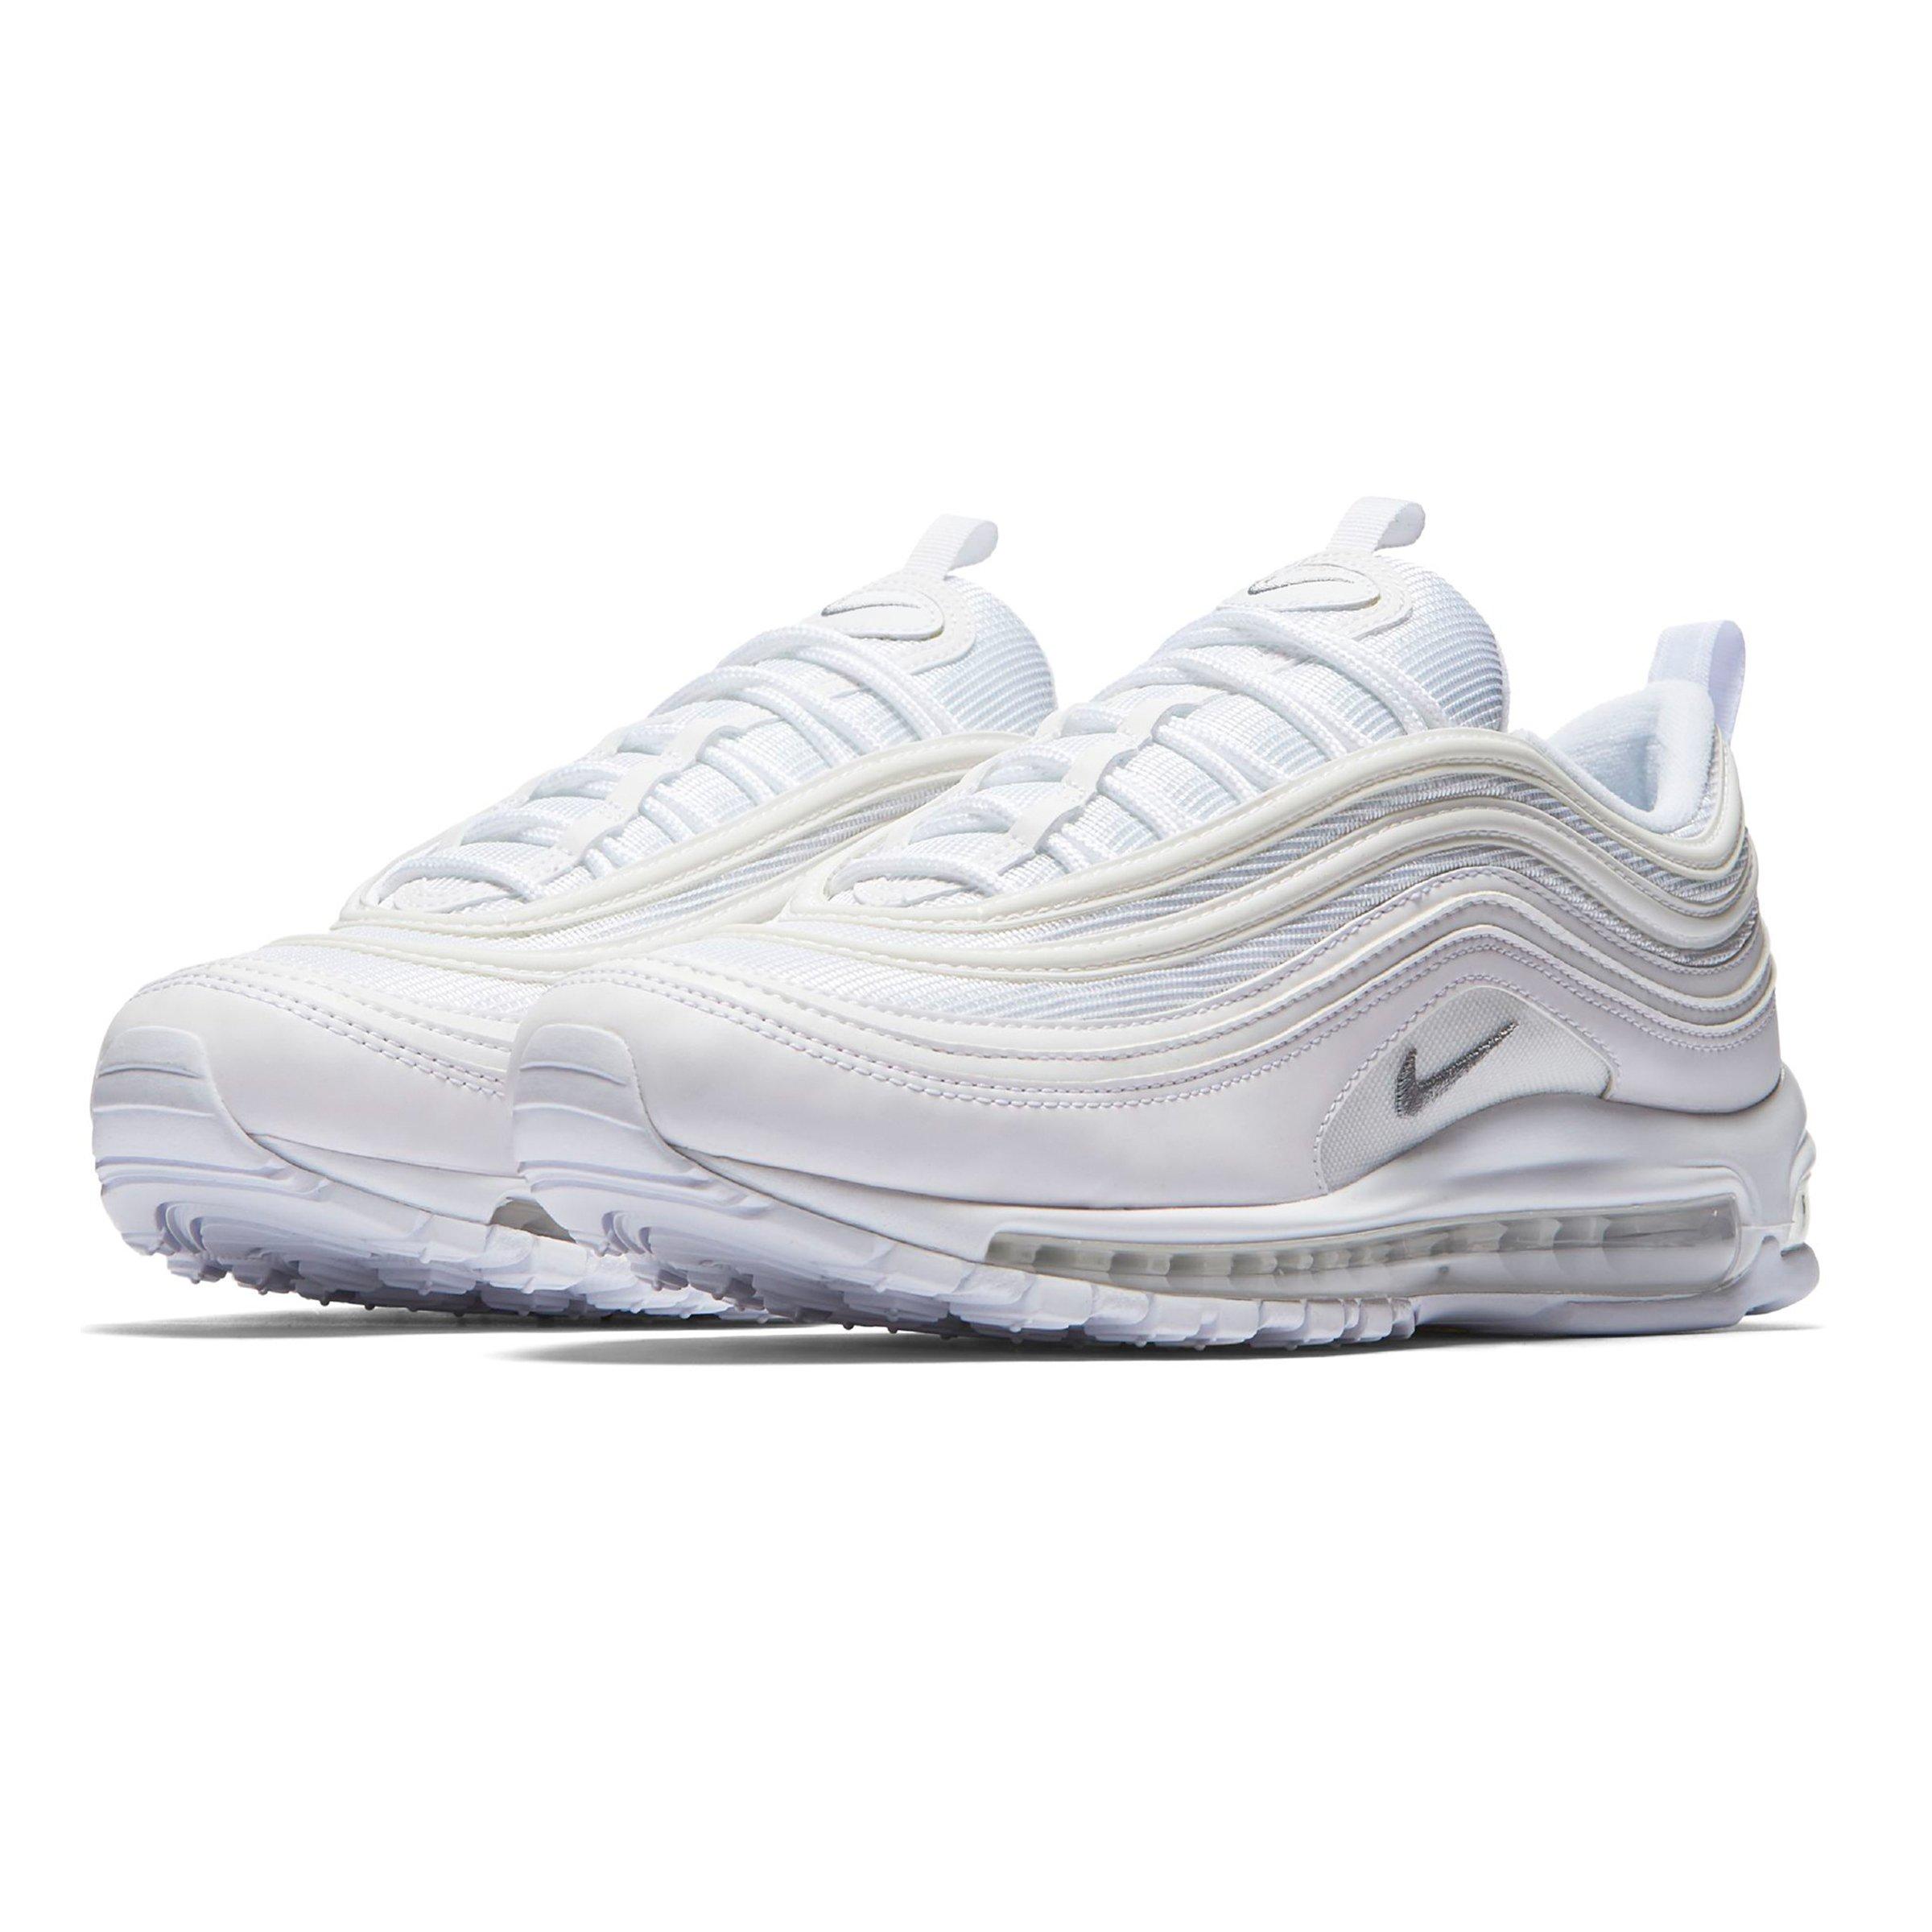 Nike Max 97 "White/White" Shoe